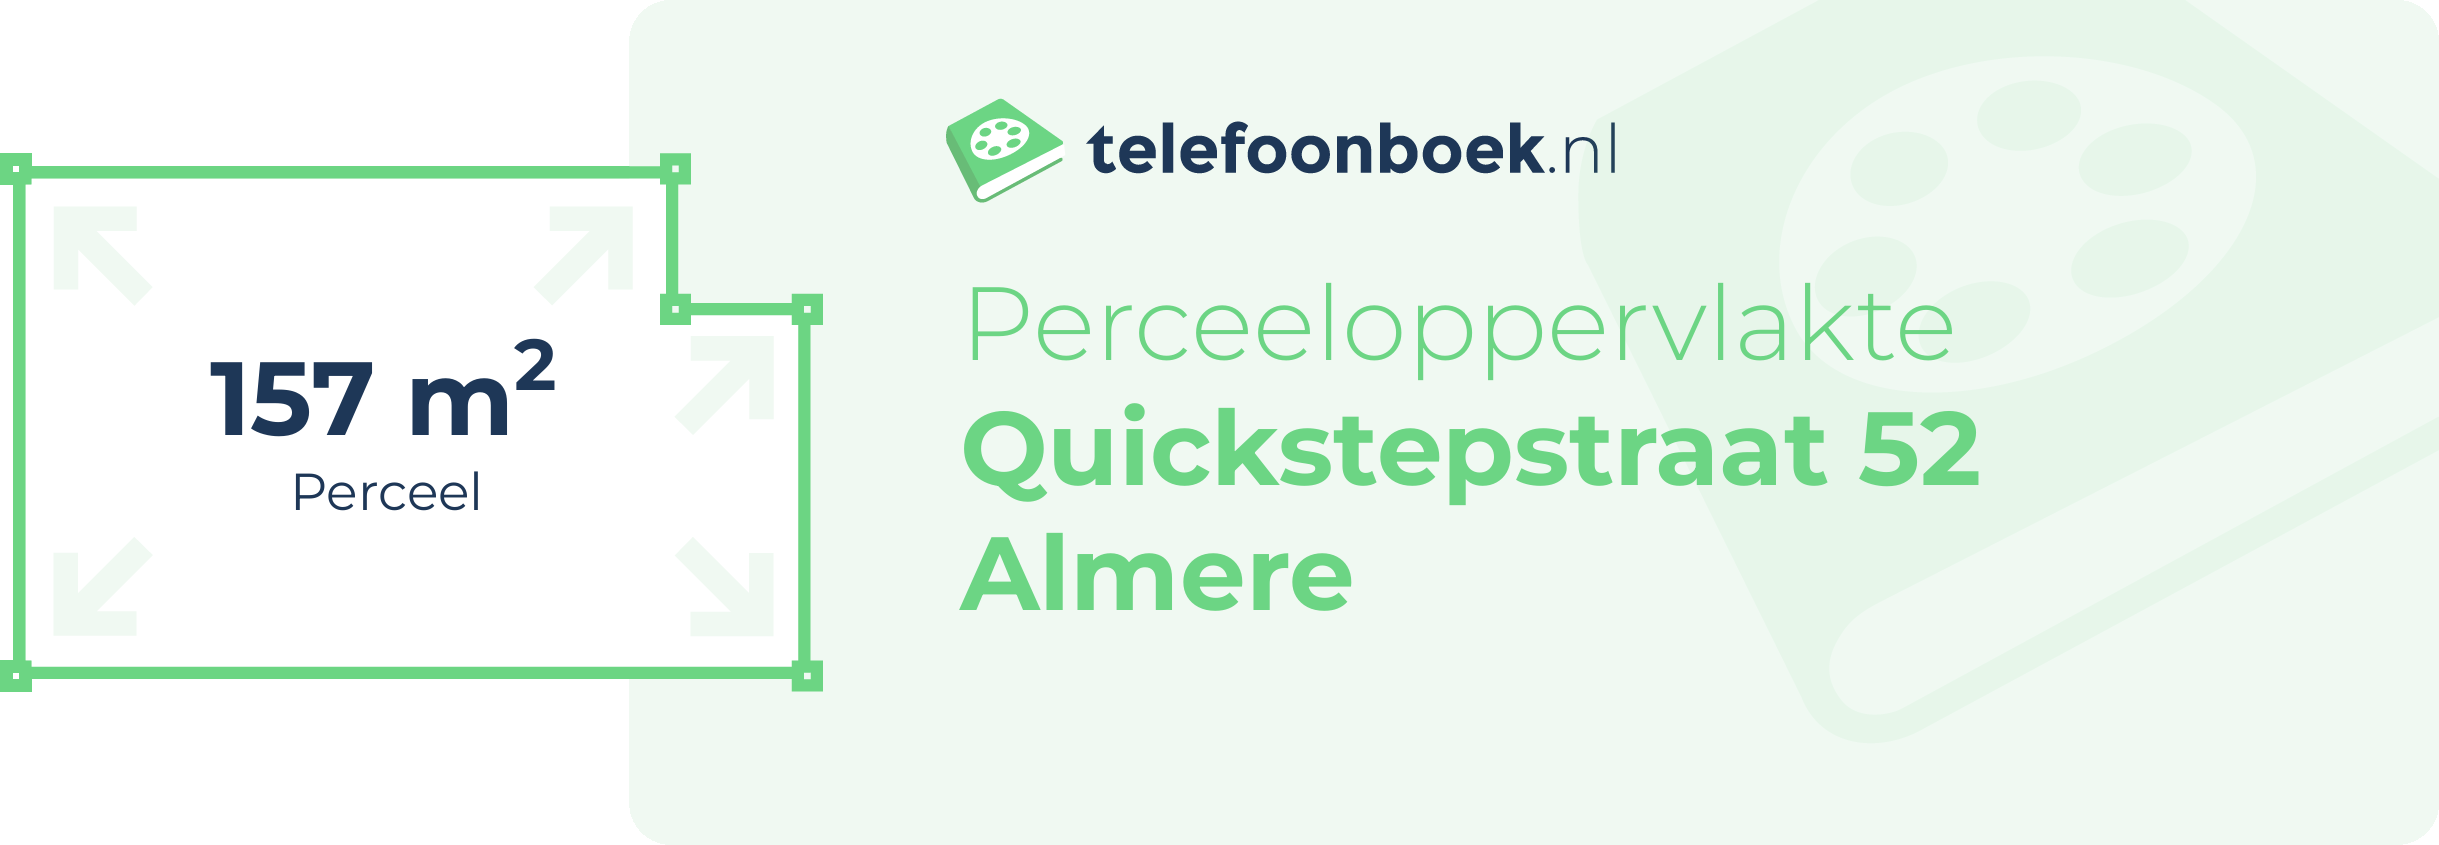 Perceeloppervlakte Quickstepstraat 52 Almere